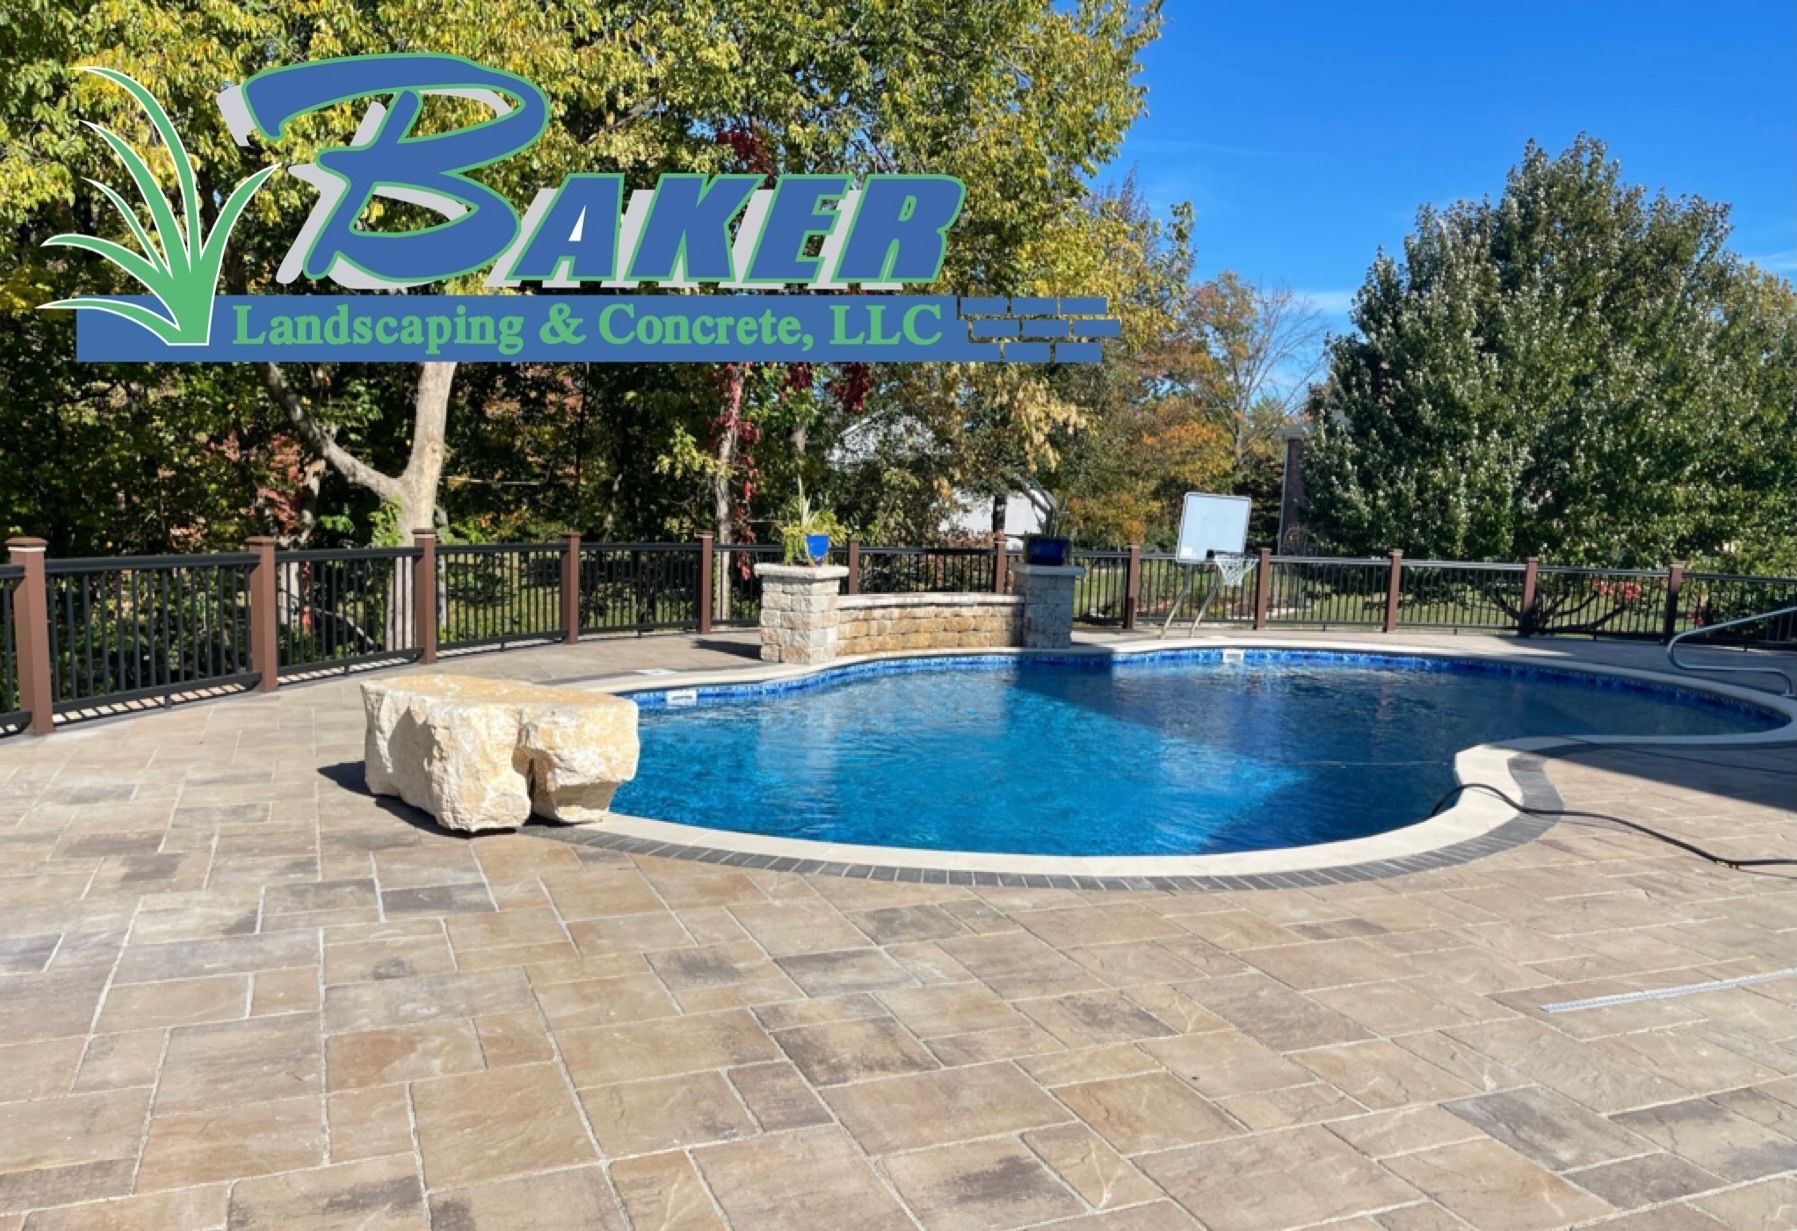 Pool Deck Design - St. Louis, MO - Baker Landscaping & Concrete, LLC
